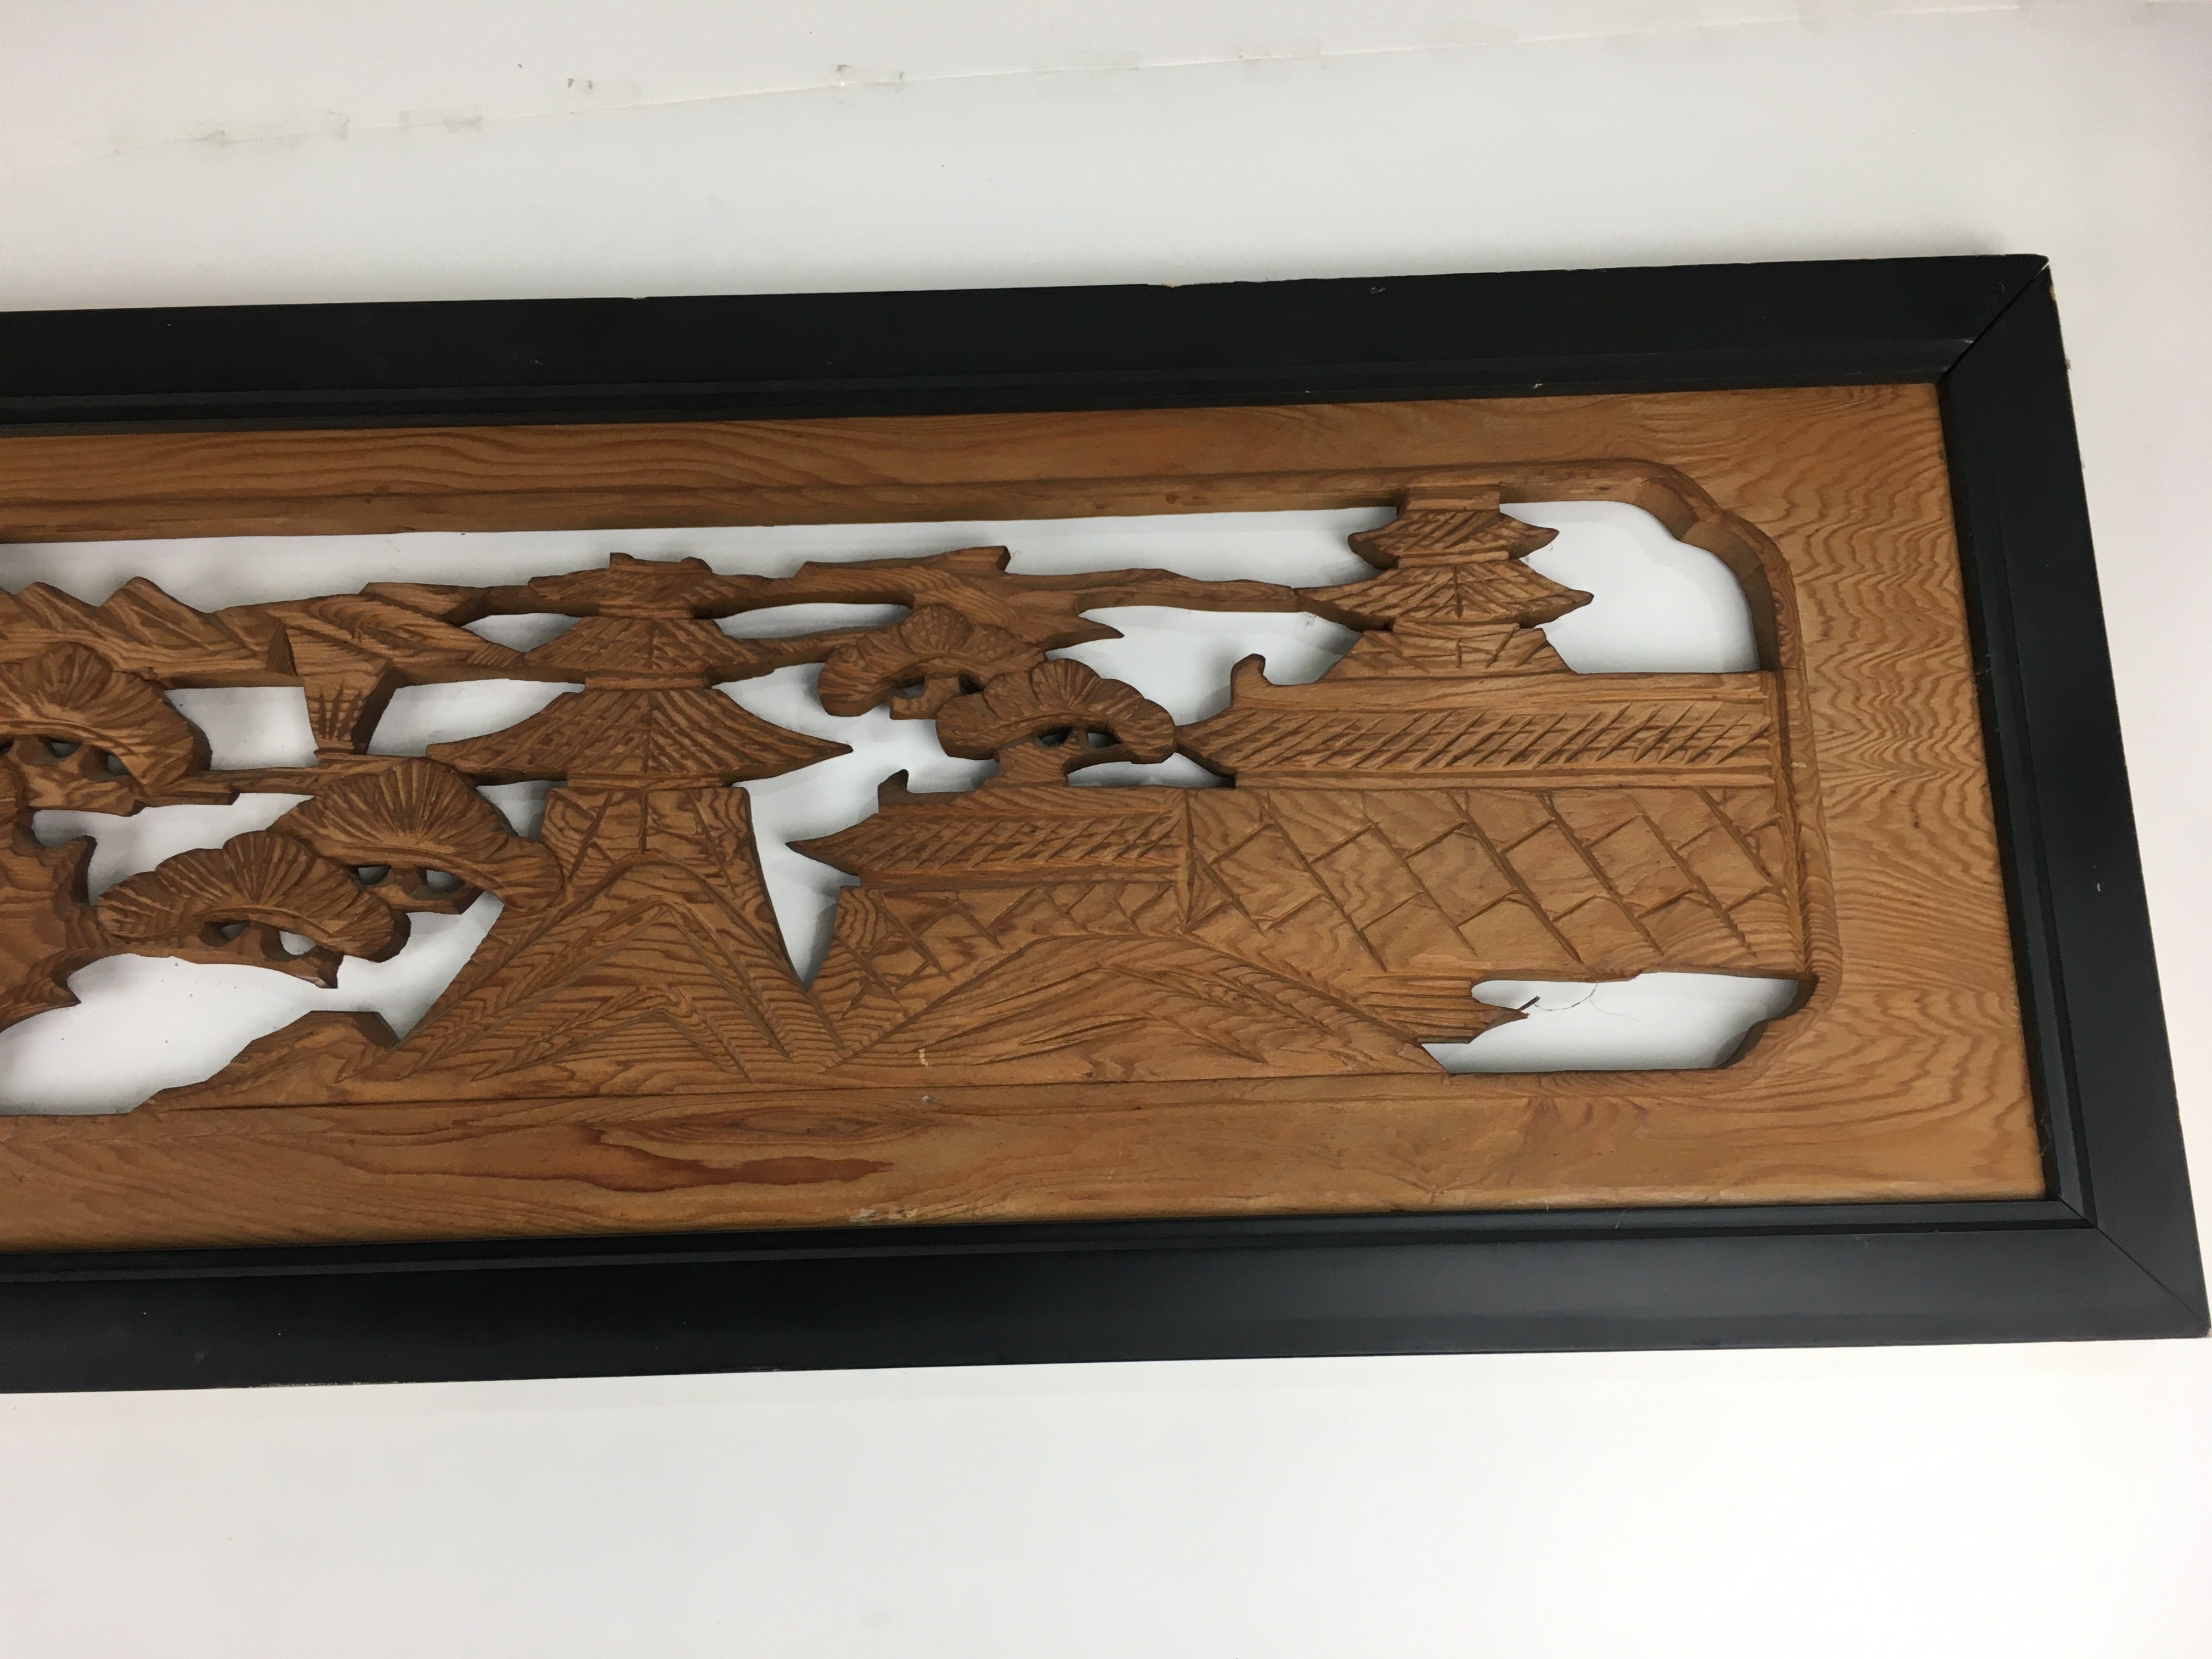 Japanese Wooden Transom Panel Vtg Ranma Door Carving Decoration R22